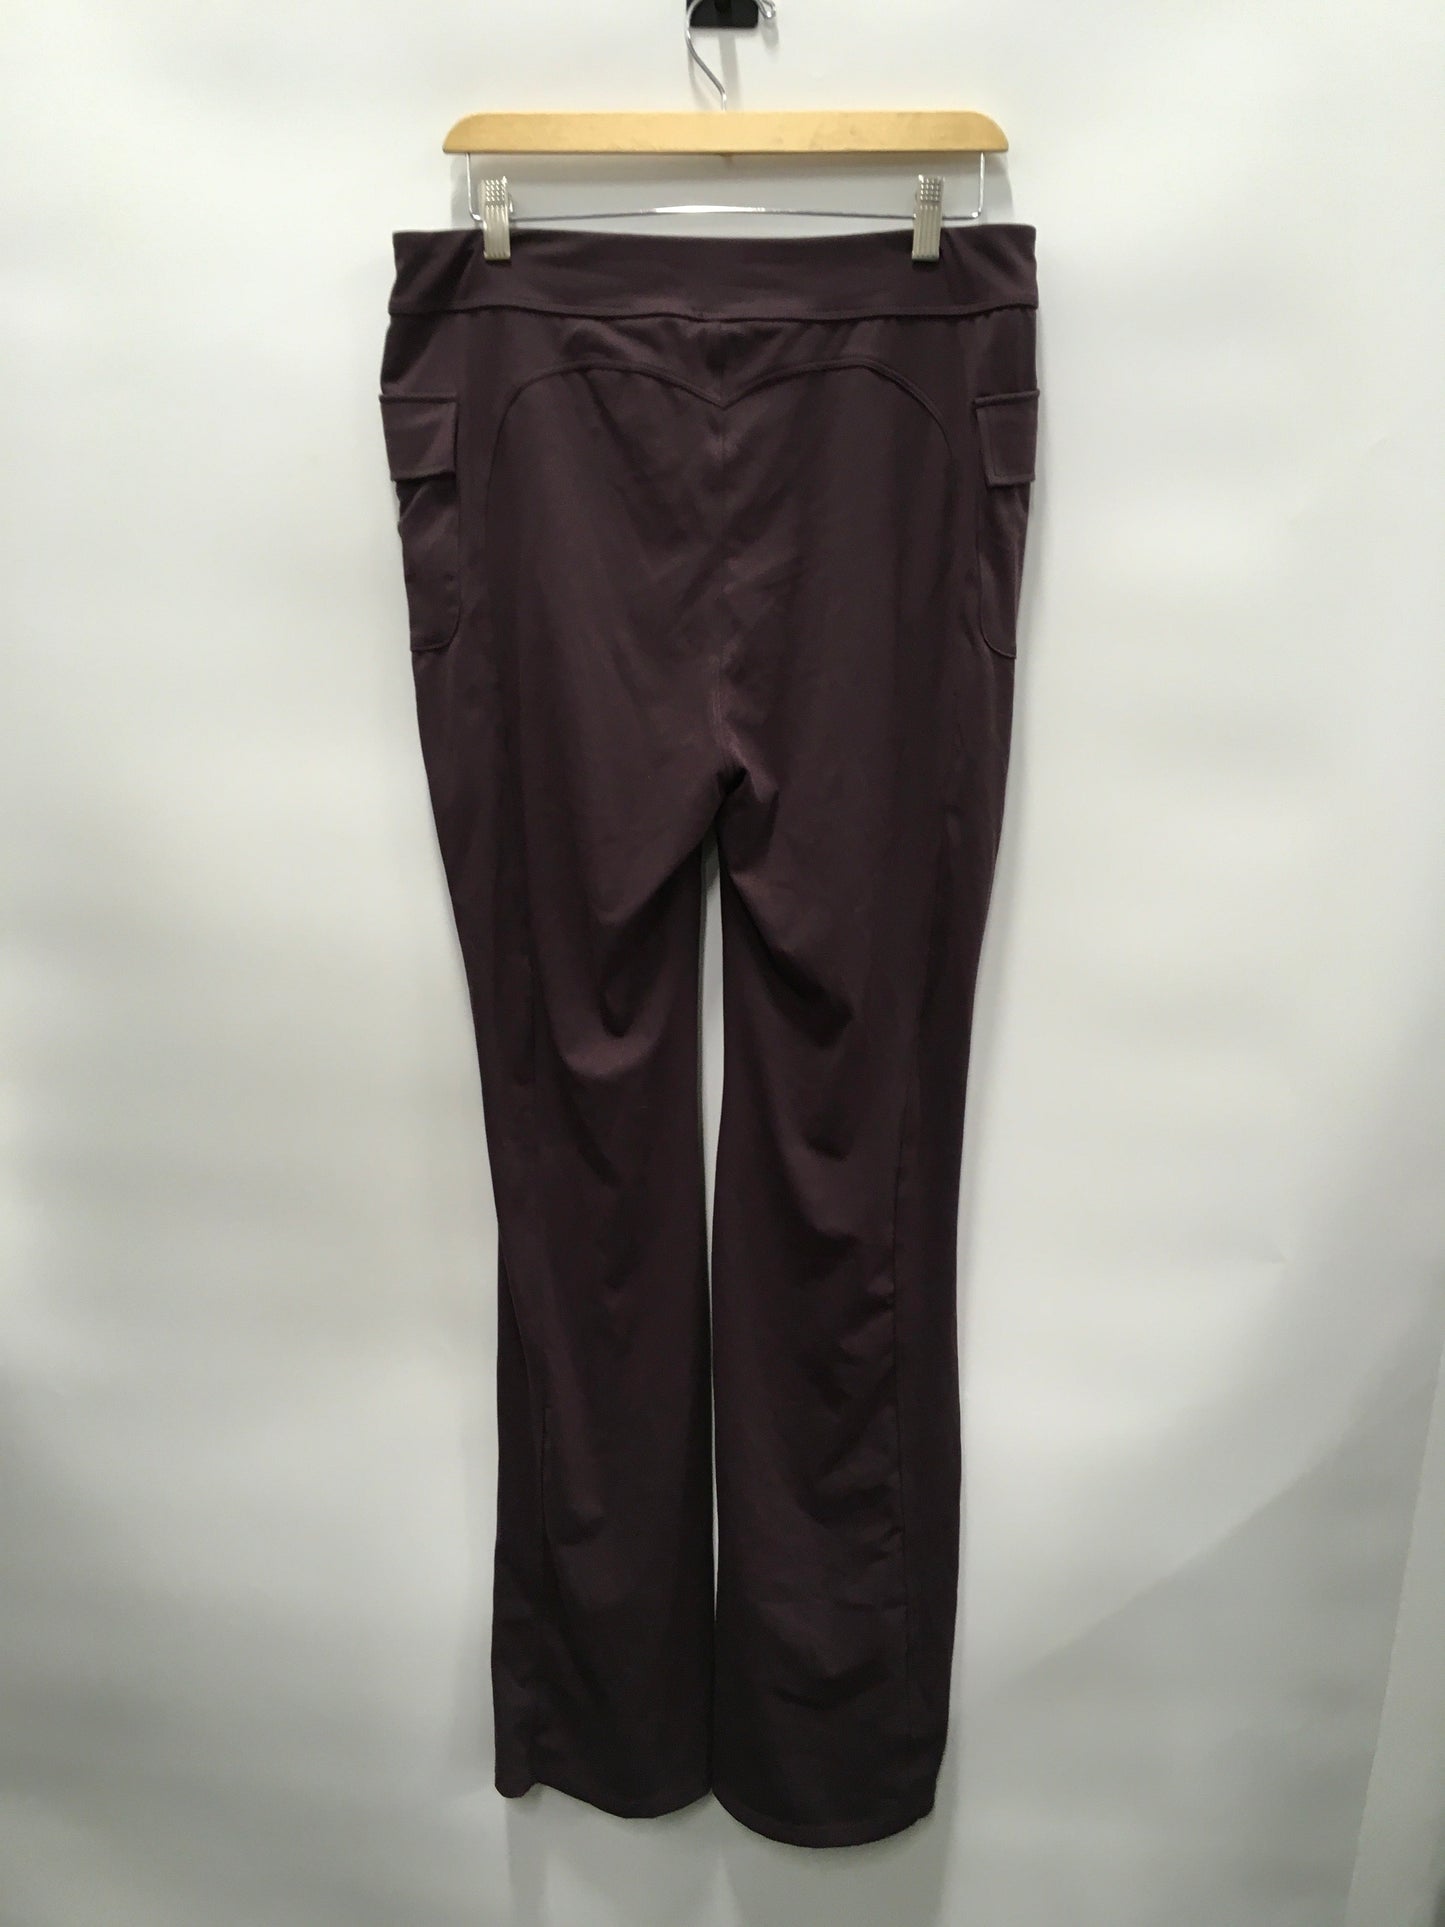 Purple Athletic Pants Halara, Size Xl